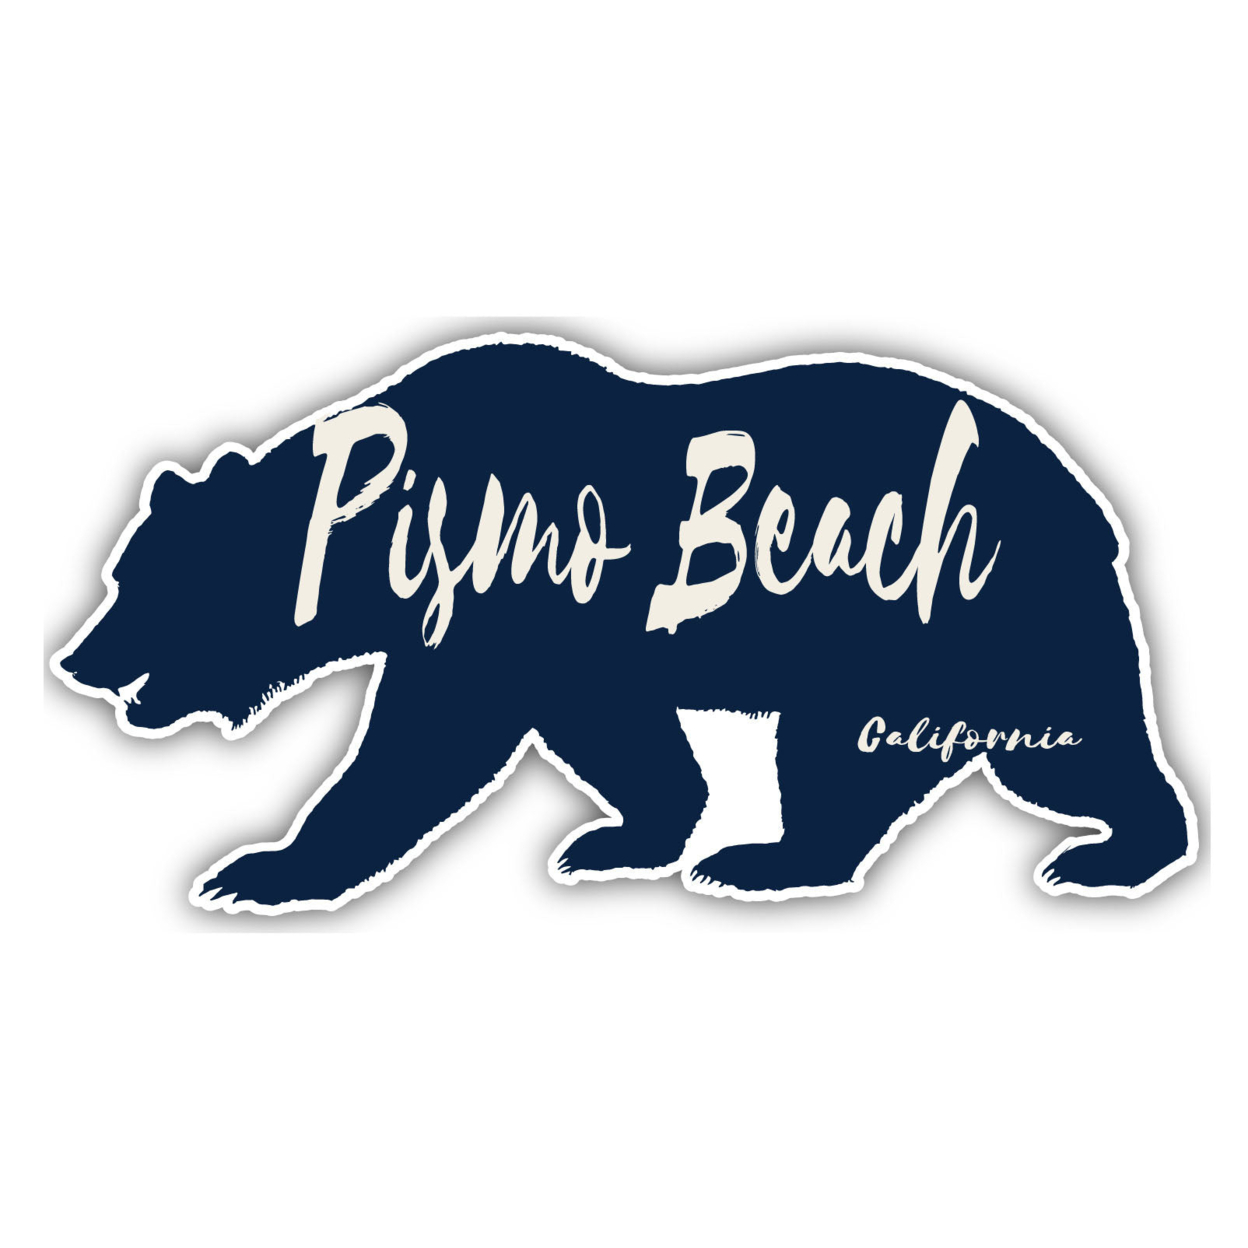 Pismo Beach California Souvenir Decorative Stickers (Choose Theme And Size) - Single Unit, 2-Inch, Camp Life